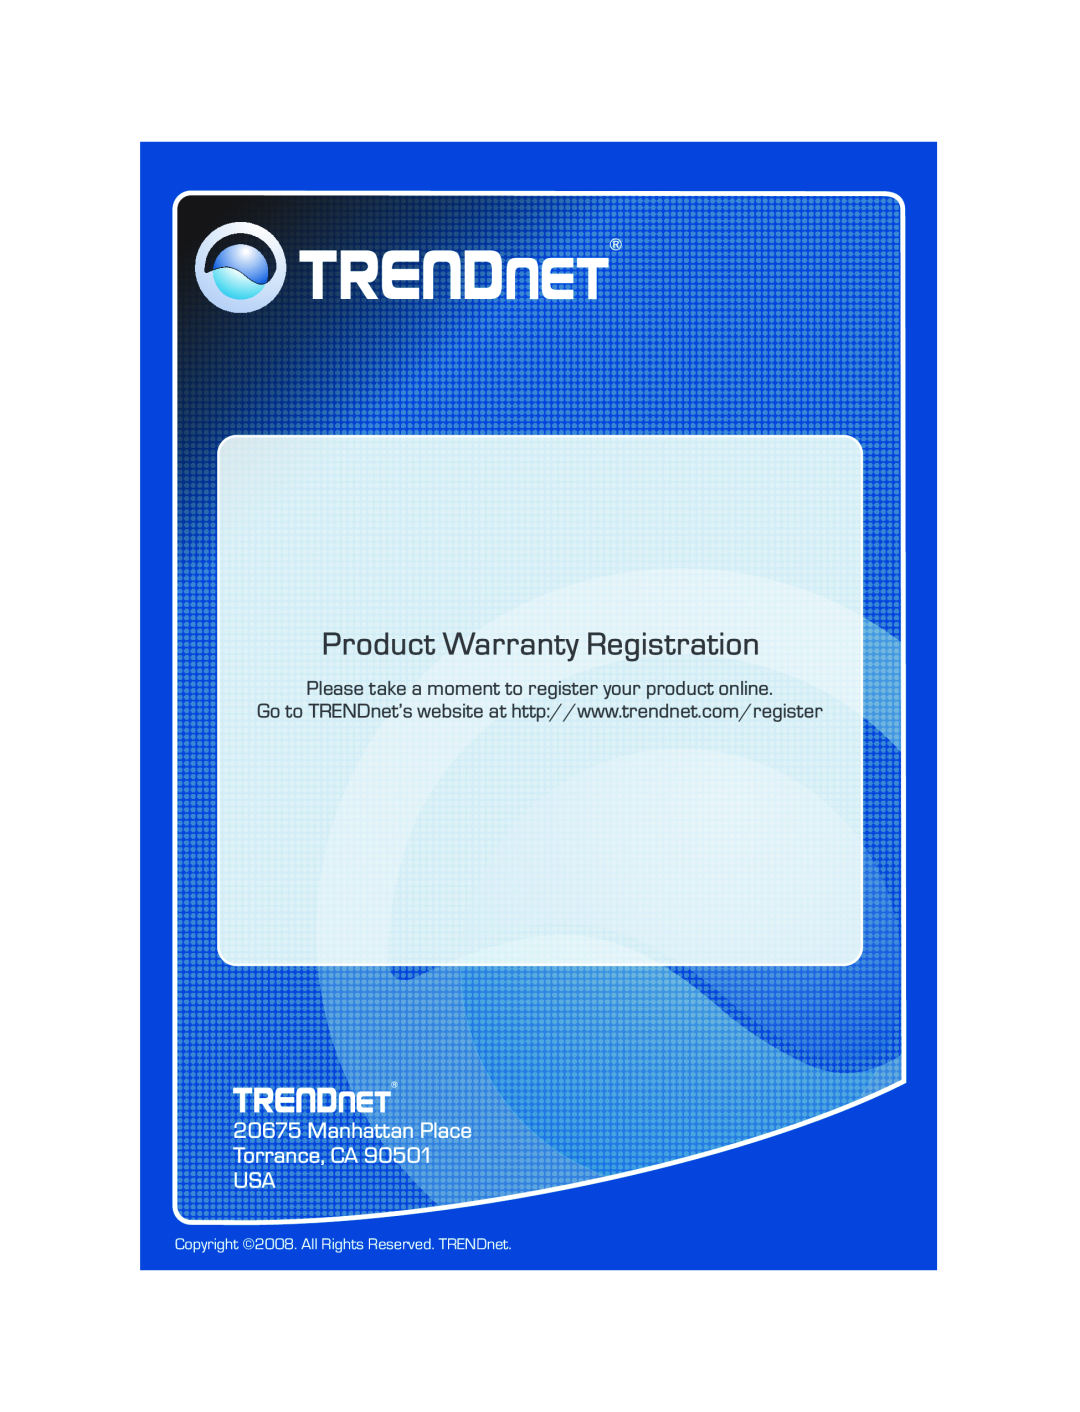 TRENDnet TV-IP110W manual Manhattan Place Torrance, CA USA, Product Warranty Registration 